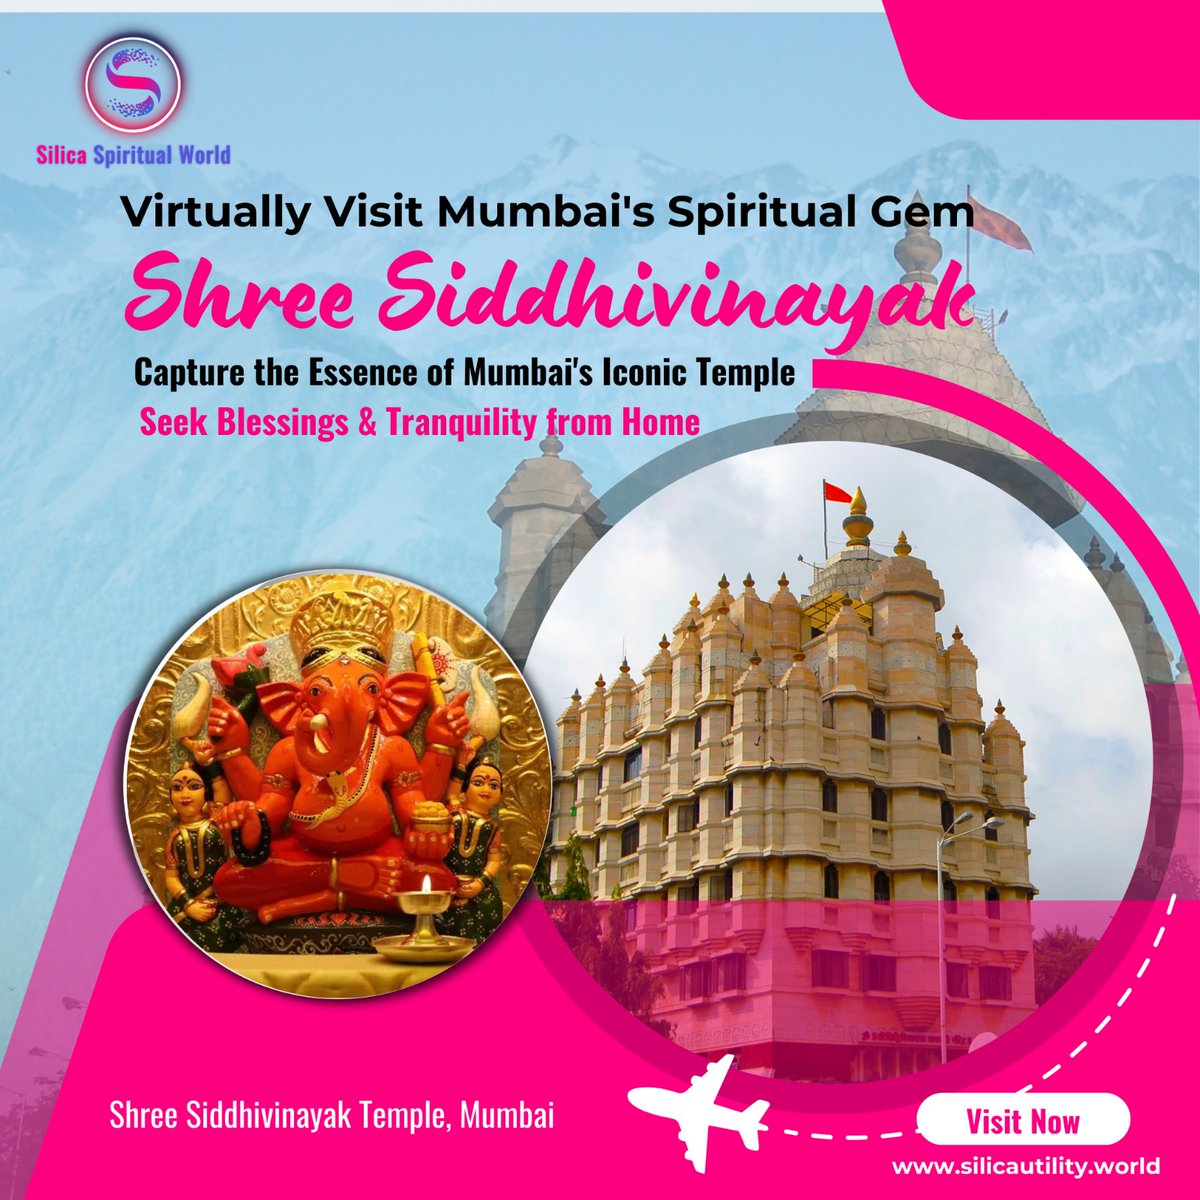 Virtually visit Mumbai spiritual gem 
shree siddhivinayak iconic temple 🙏🙏
silicautility.world
#silica #virtualtour #temples #virtualtrip